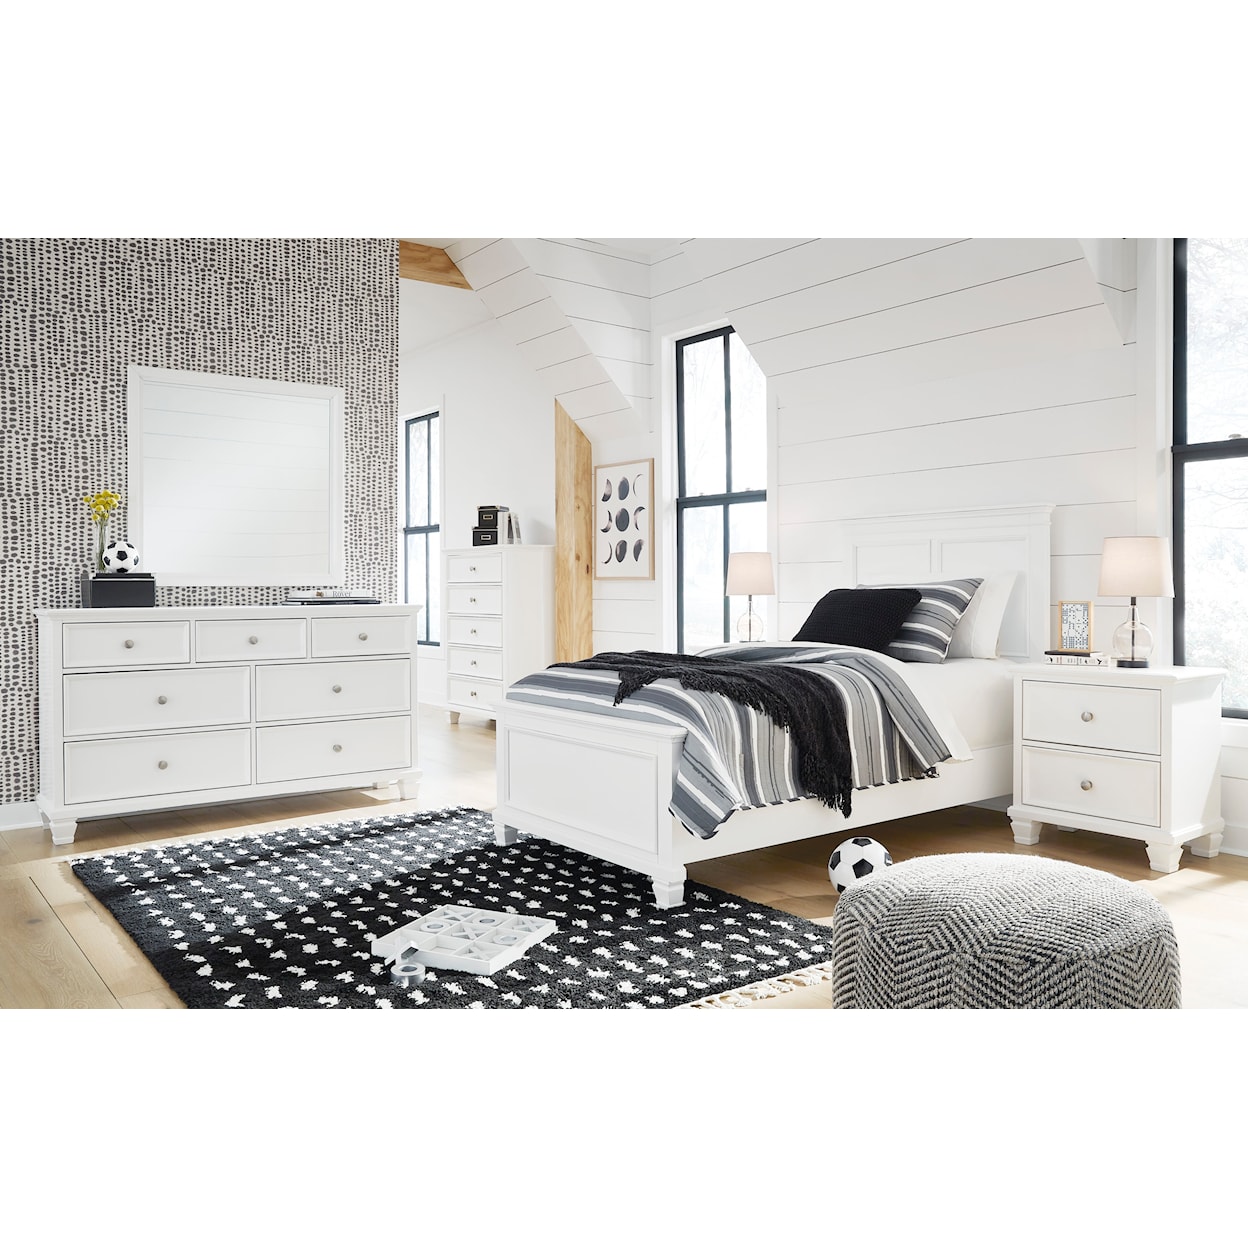 StyleLine Fortman Twin Bedroom Set